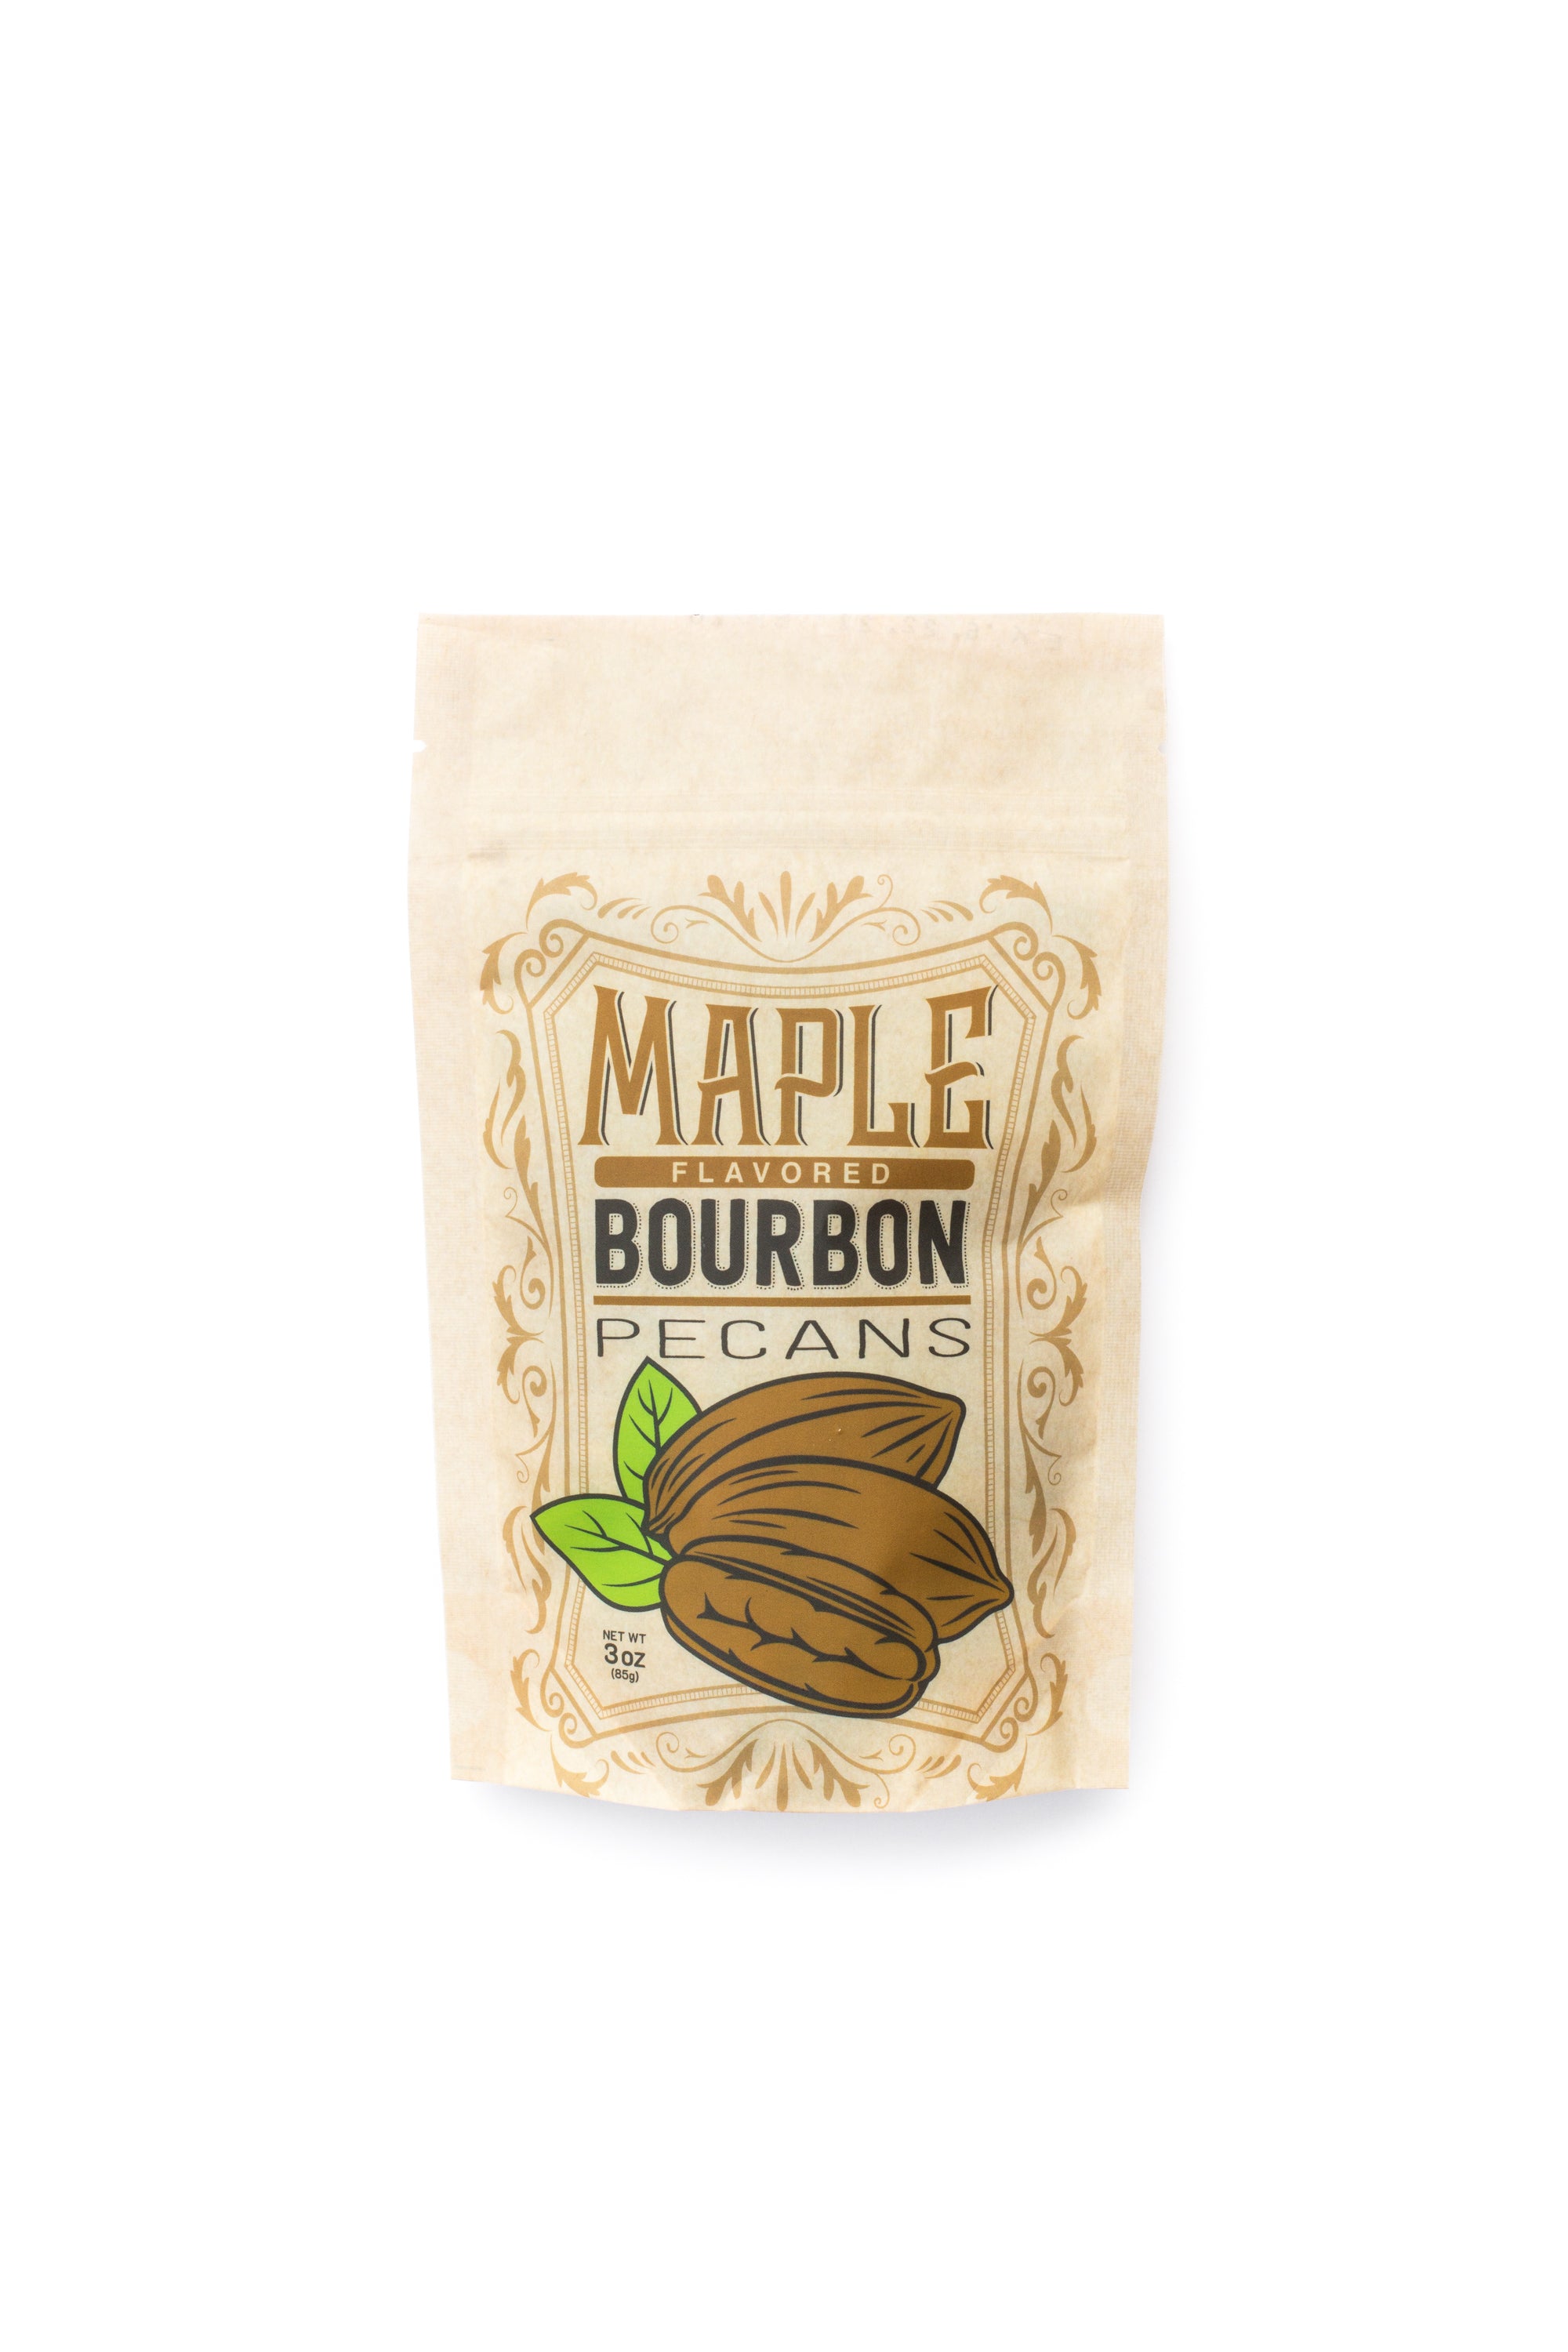 Maple Flavored Bourbon Pecans photo